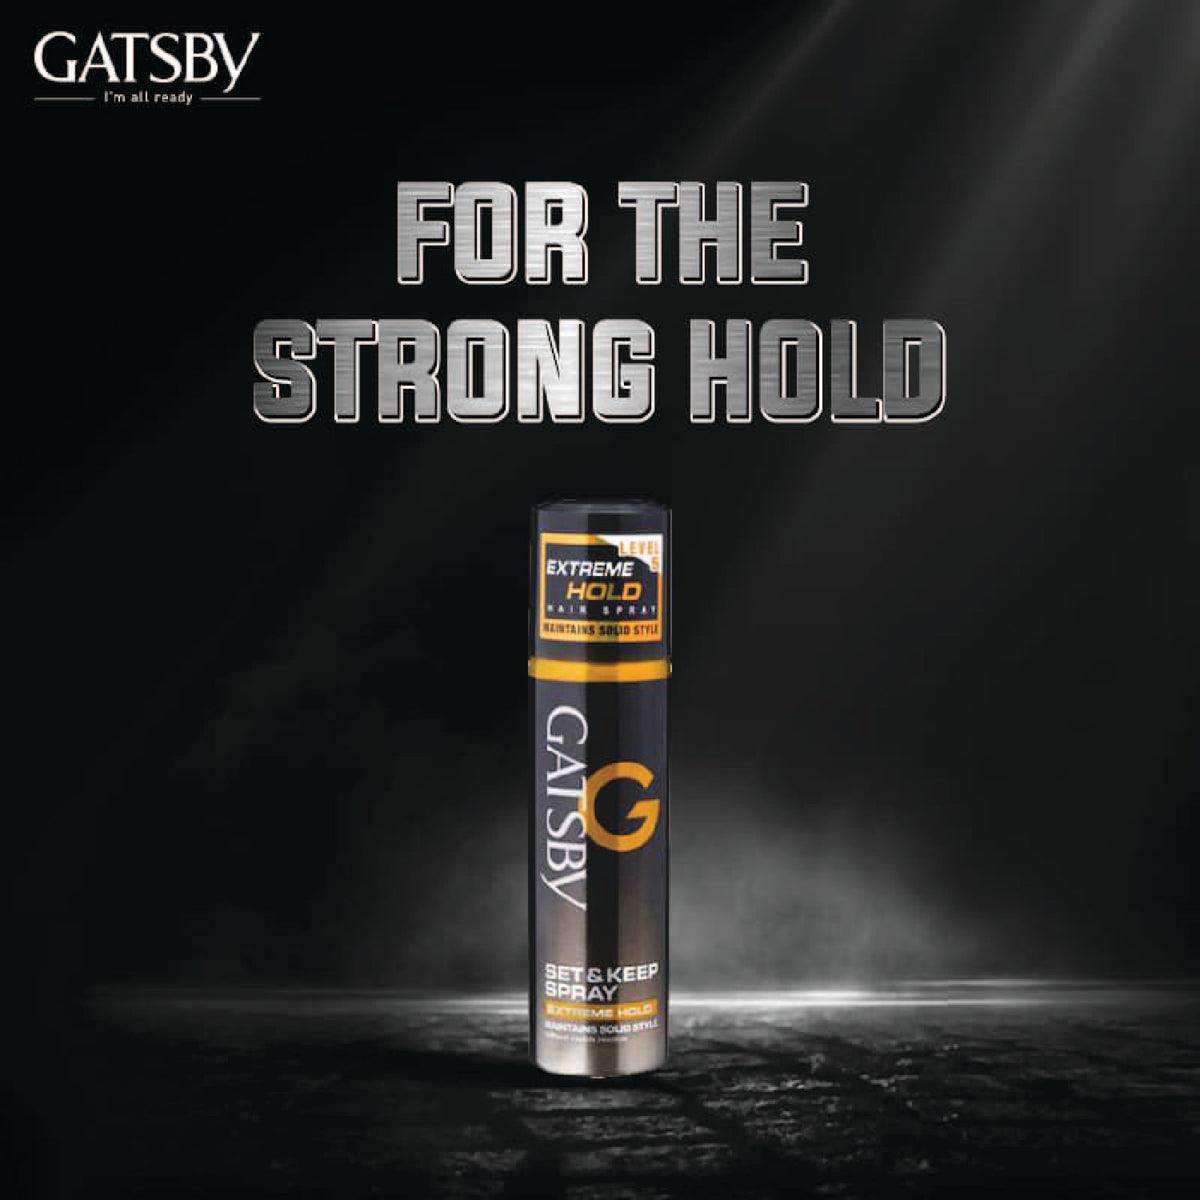 Gatsby Set & Keep Hair Spray - Extreme Hold, 66ml Gardenia Cosmotrade LLP